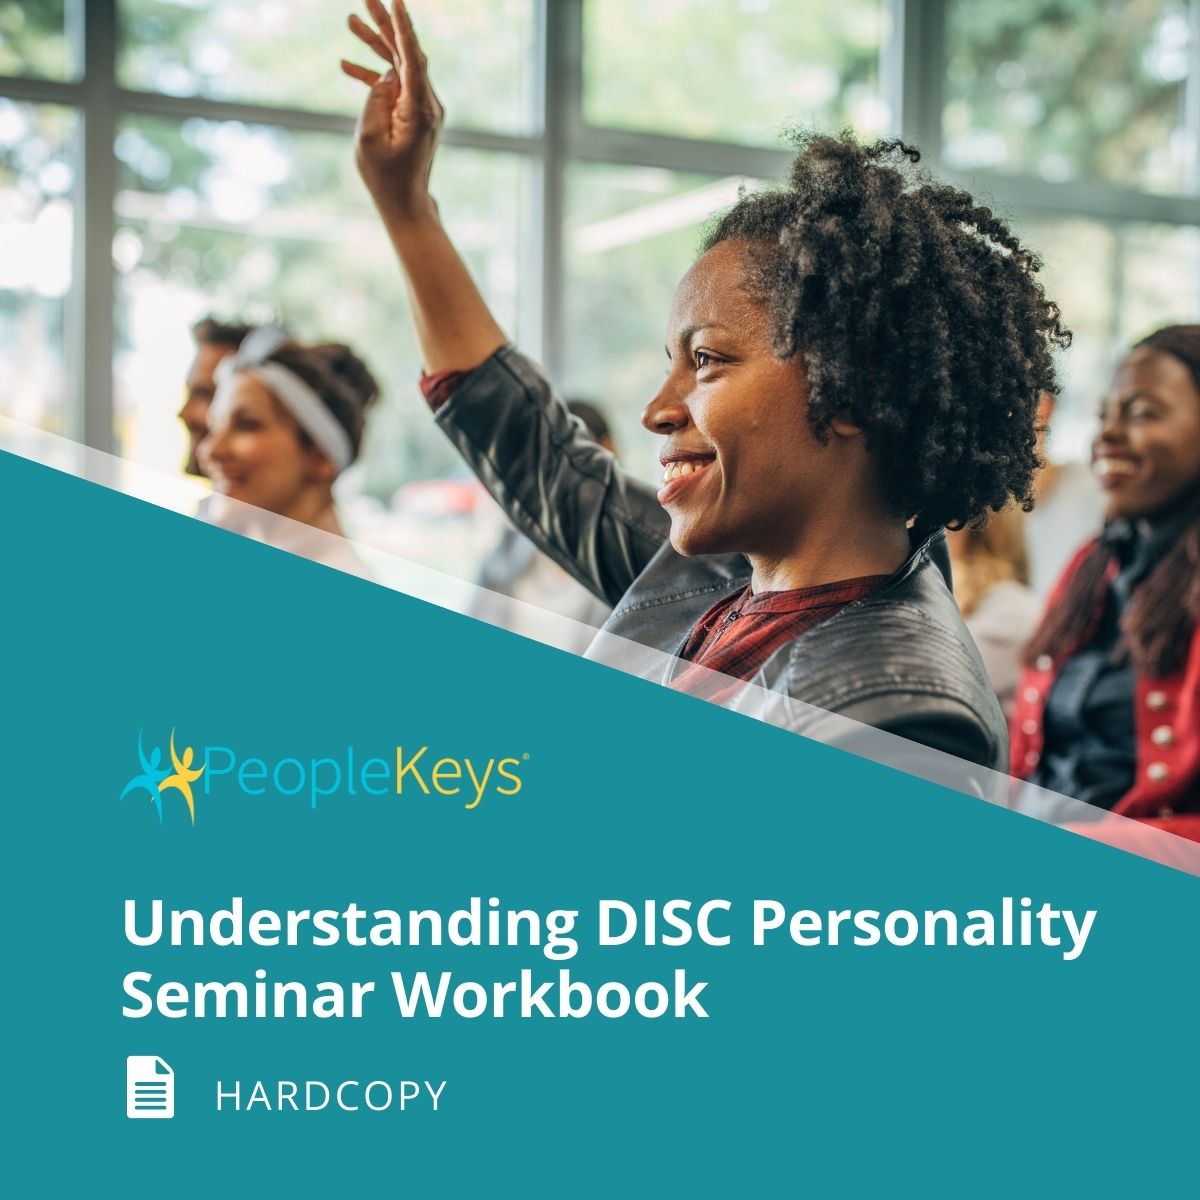 Understanding DISC Personality Seminar Workbook (Hardcopy)